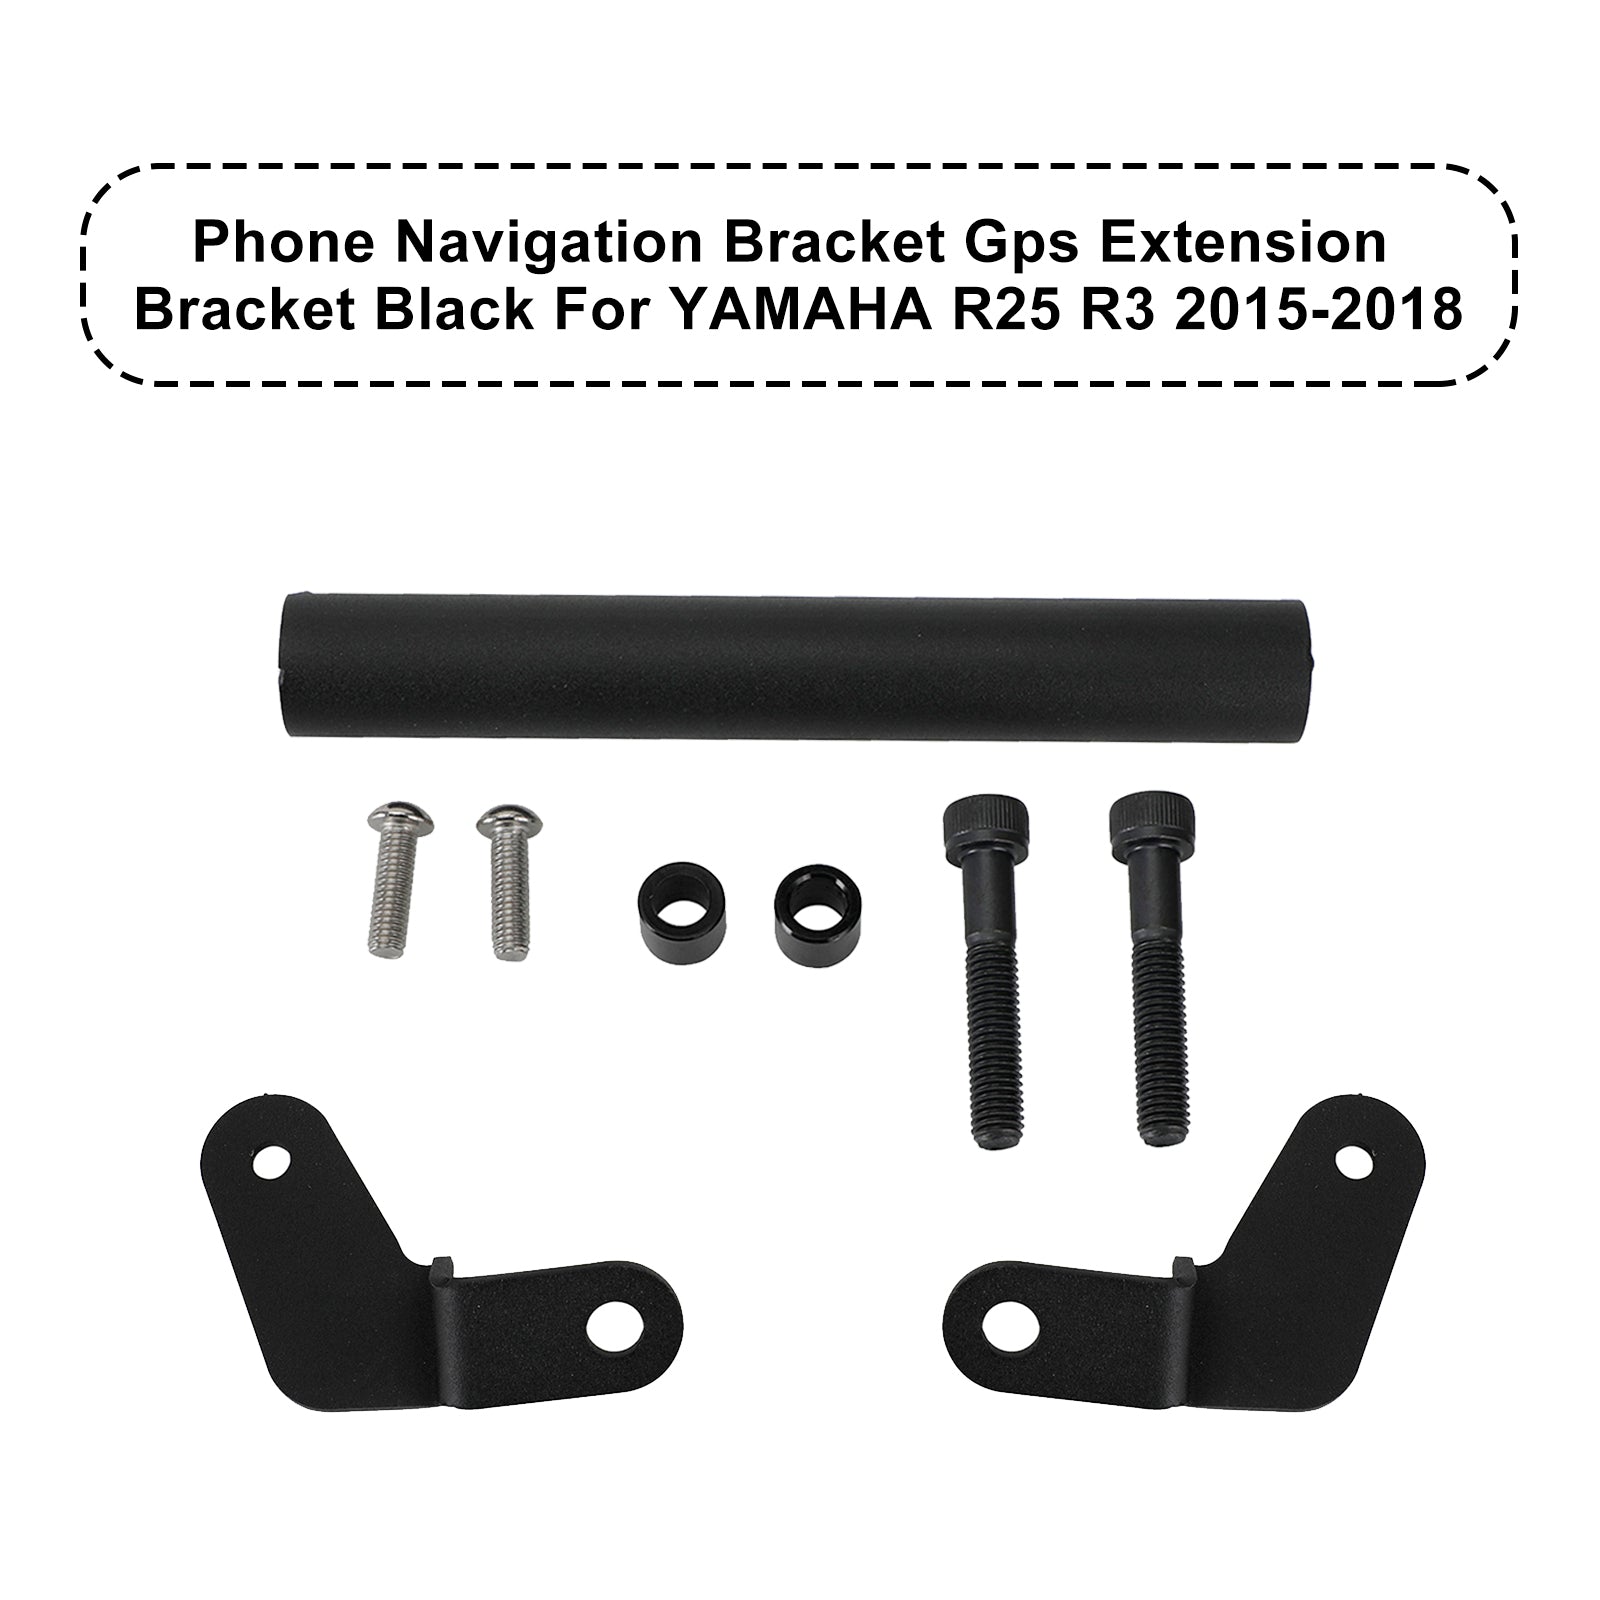 Navigation Bracket Phone Gps Bracket Black Fits For Yamaha R25 R3 2015-2018